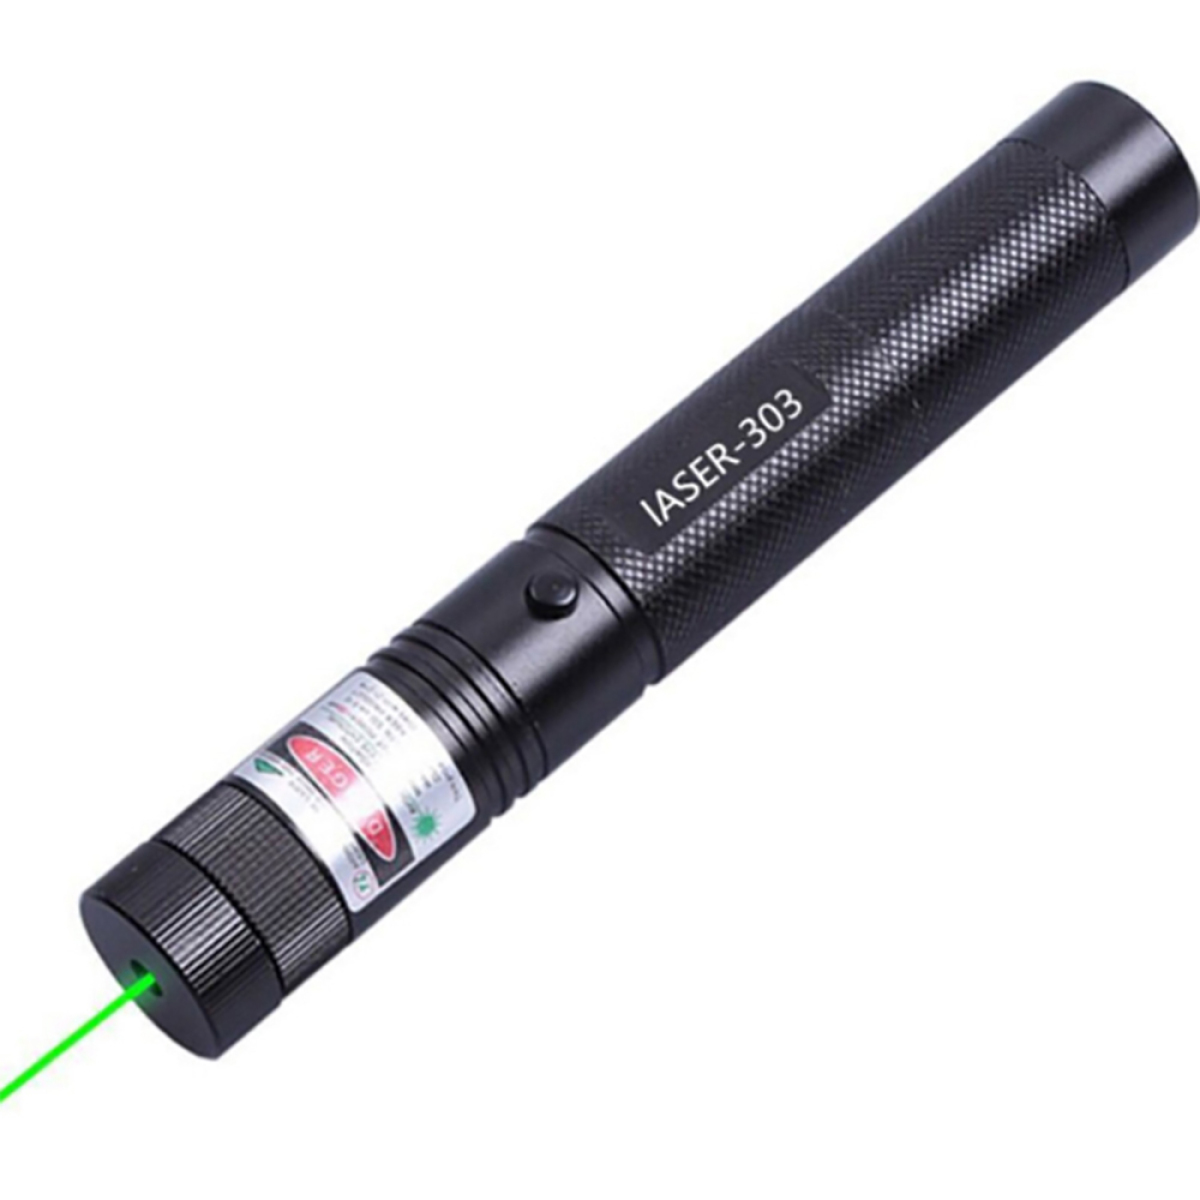 ELKUAIE grüner Laser Taschenlampe